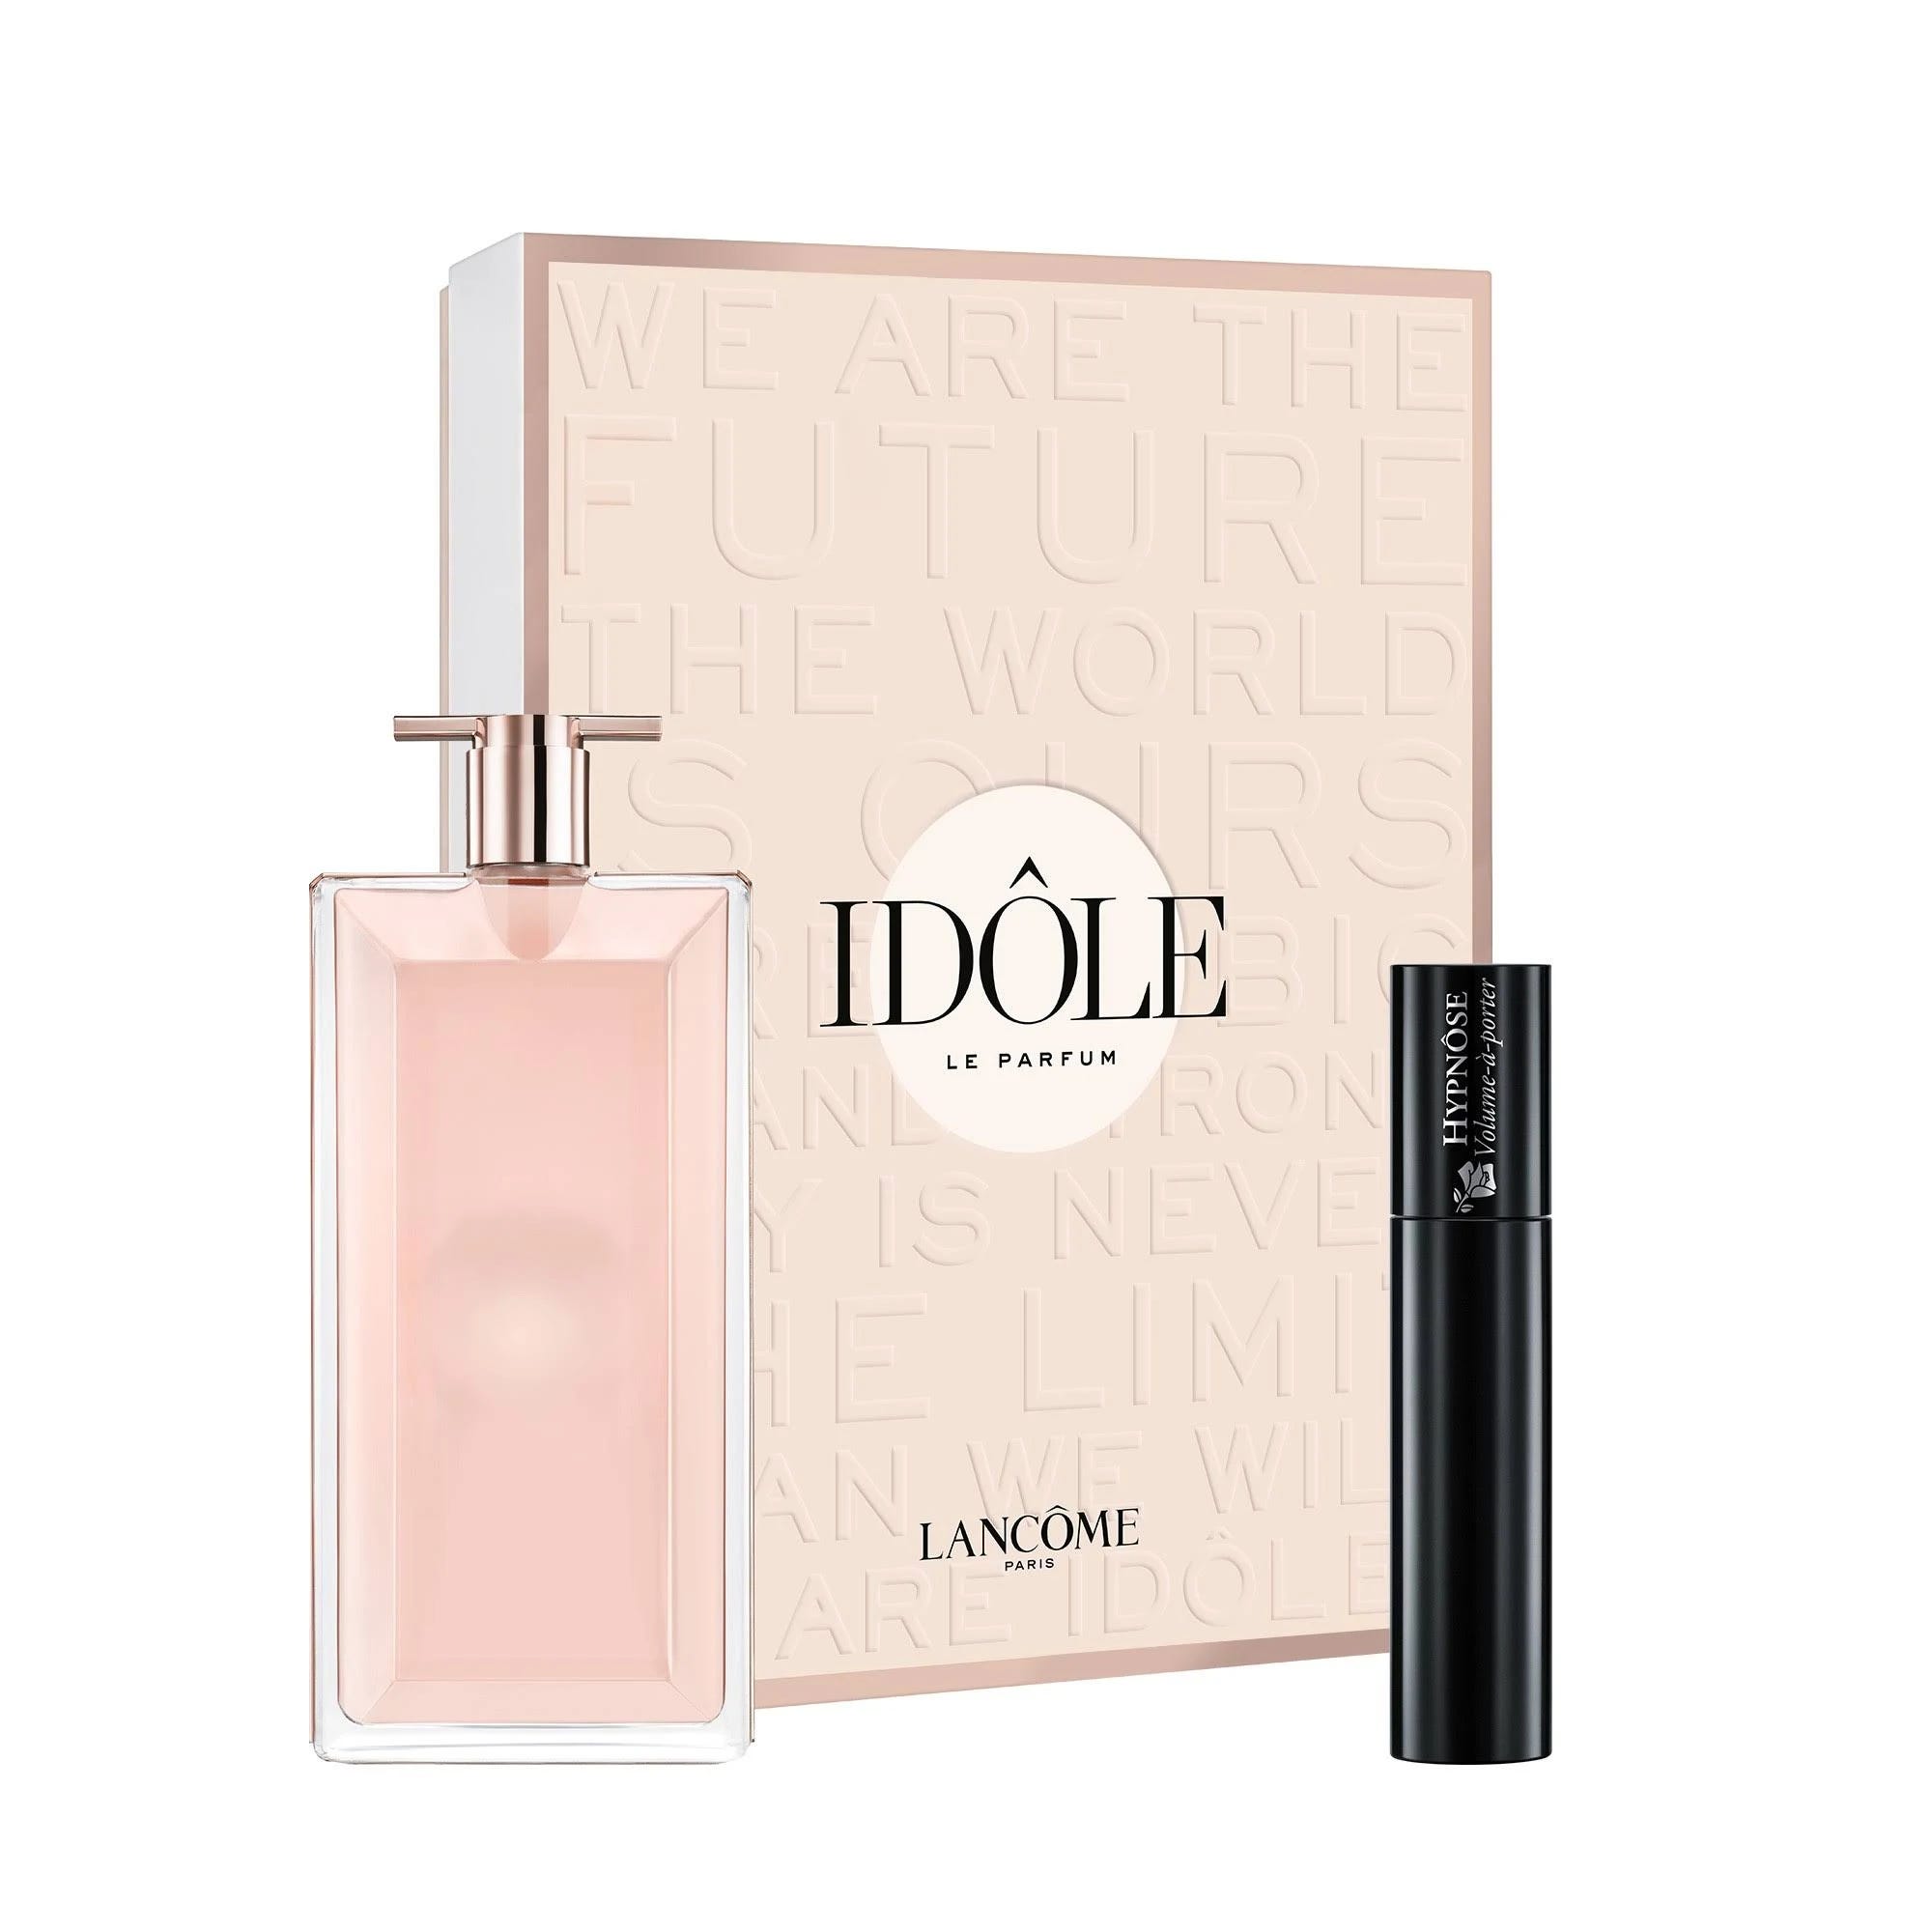 Lancome Idole Floral Perfume Set - Daily Wear Inspiration | Image